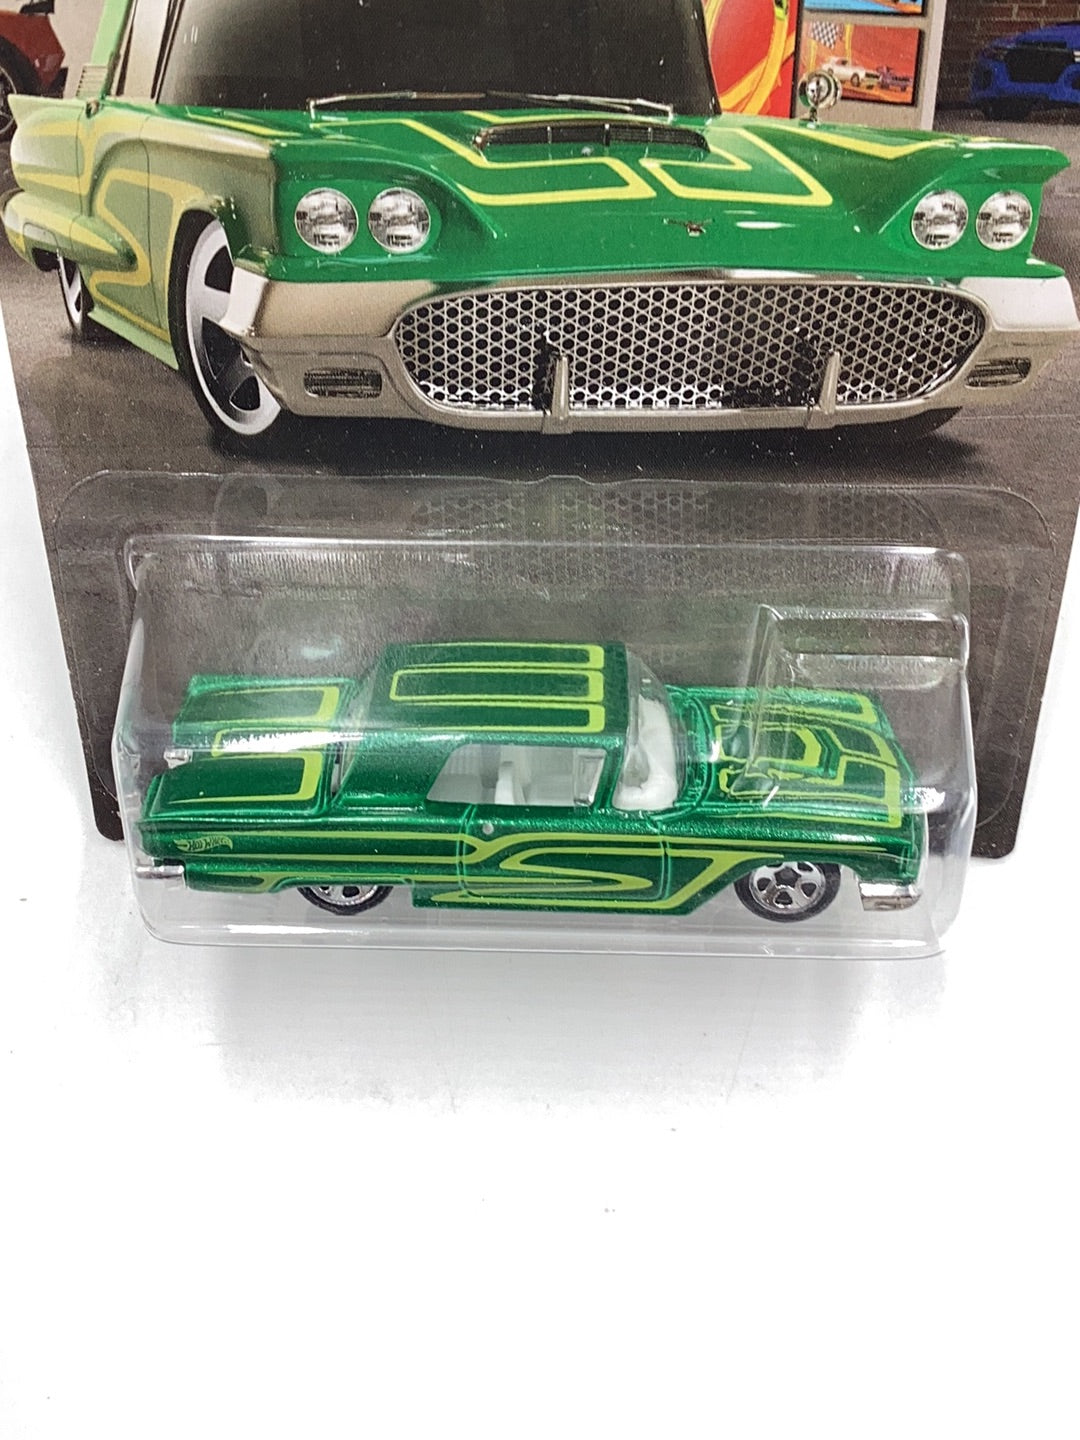 Hot Wheels Garage 9/10 58 Ford Thunderbird 151B